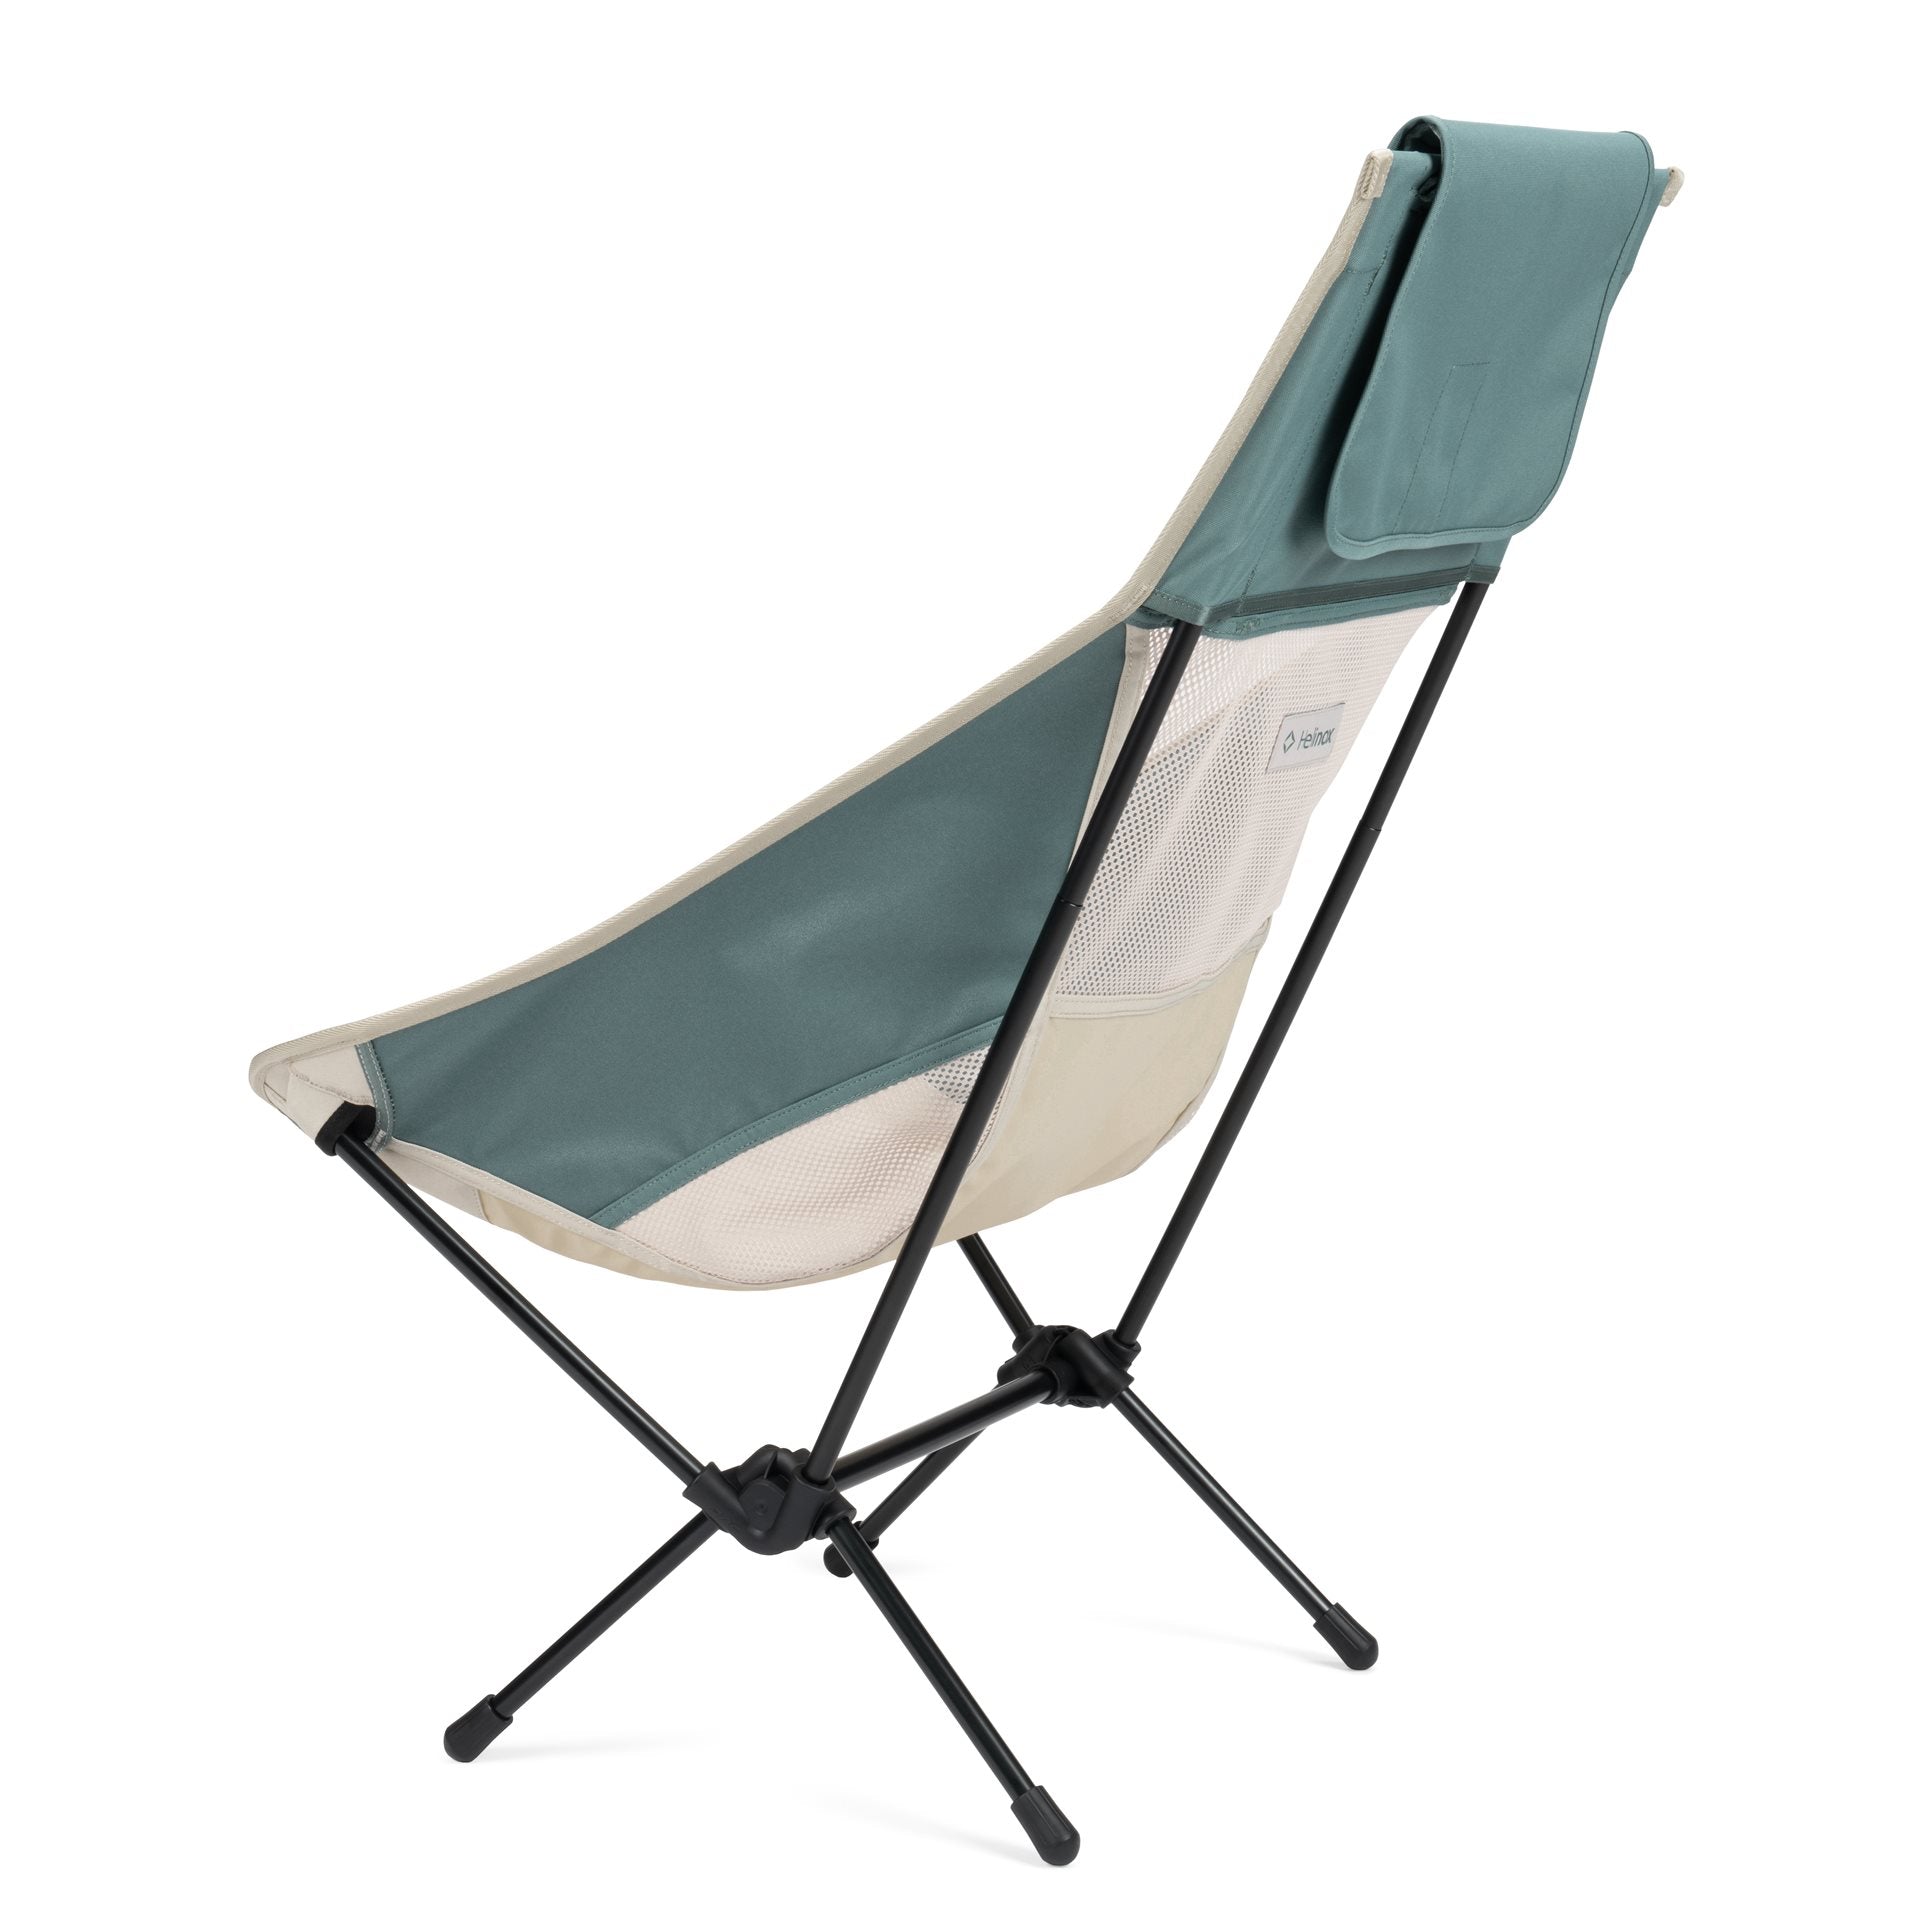 Helinox Chair Two - Lichtgewicht stoel - Bone/Teal Kampeerstoeltje - Reisartikelen-nl